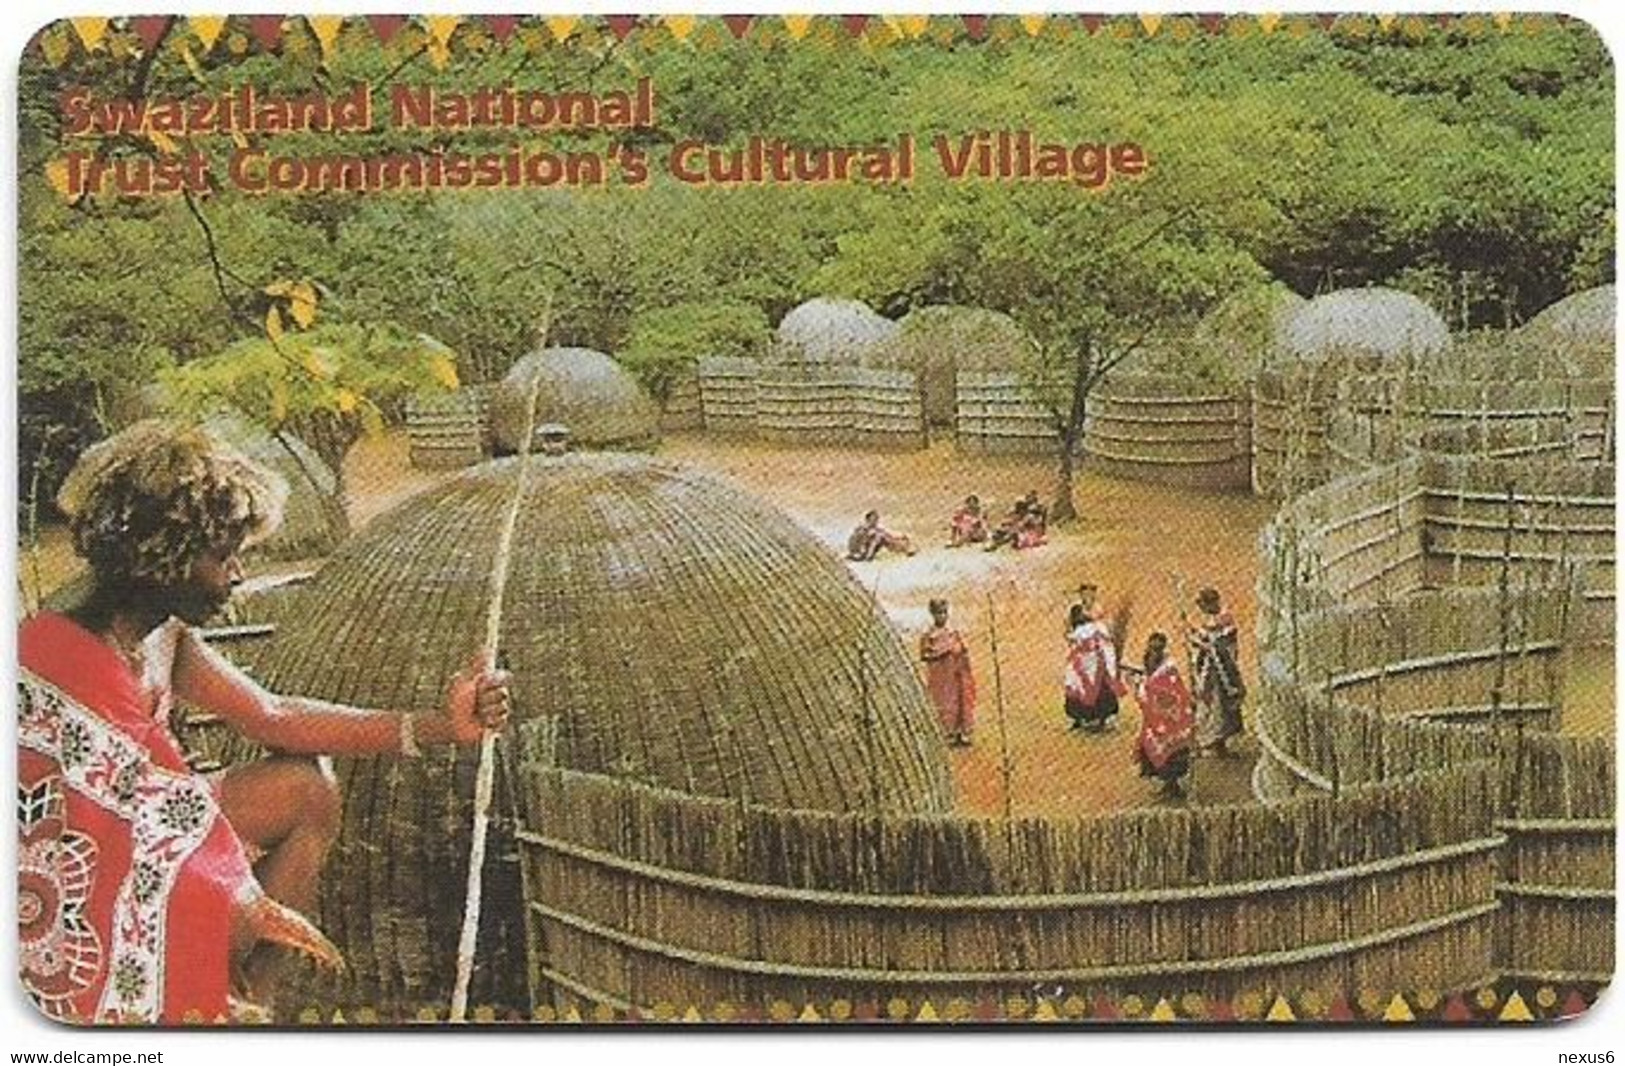 Swaziland - Swazitelecom - Cultural Village, Chip Solaic 03, Exp.03.2001, 20E, Used - Swaziland